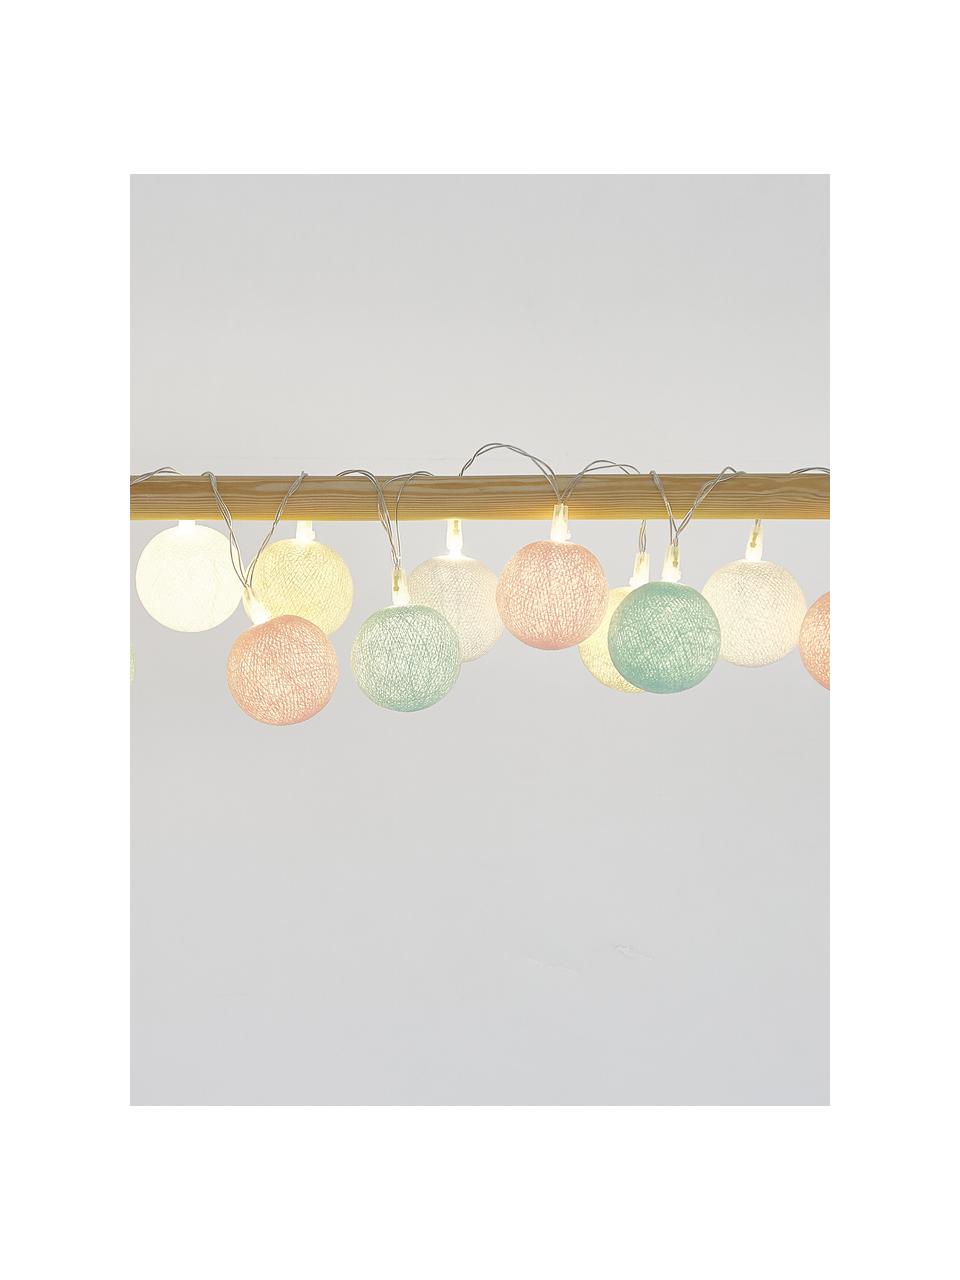 LED lichtslinger Colorain, 378 cm, 20 lampions, Lampions: polyester, WFTO gecertifi, Wit, pasteltinten, L 378 cm